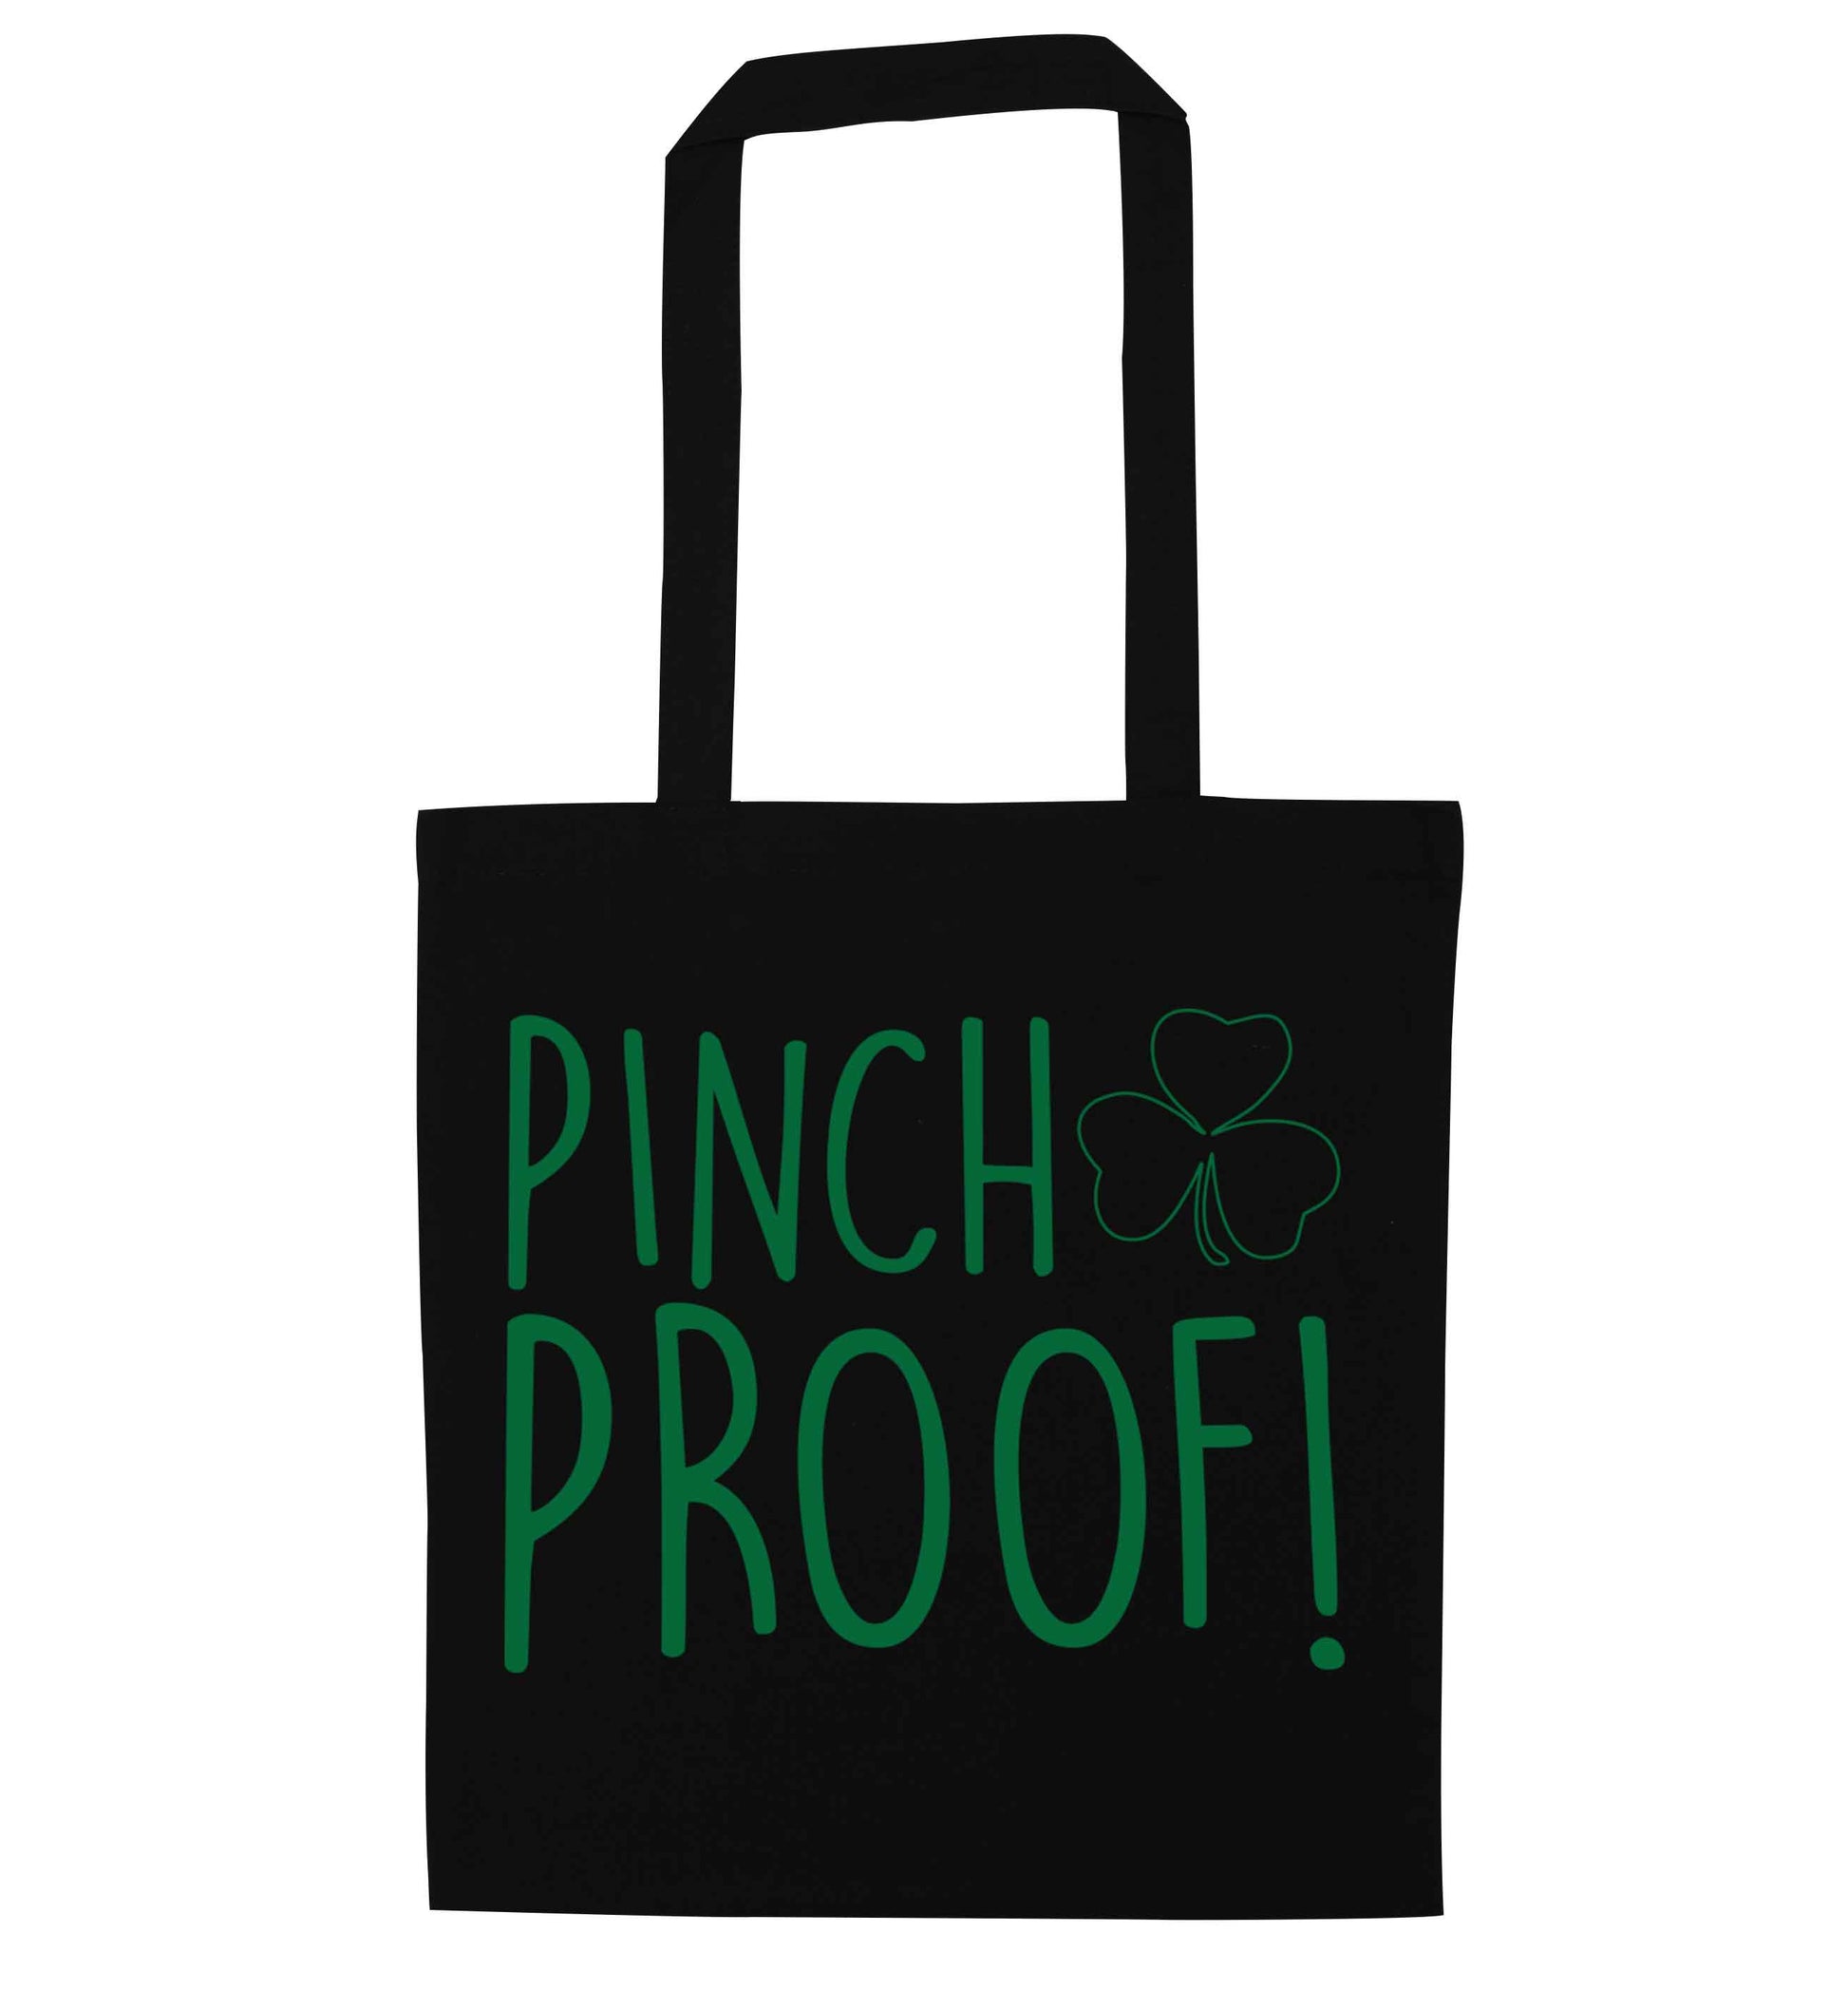 Pinch Proof black tote bag